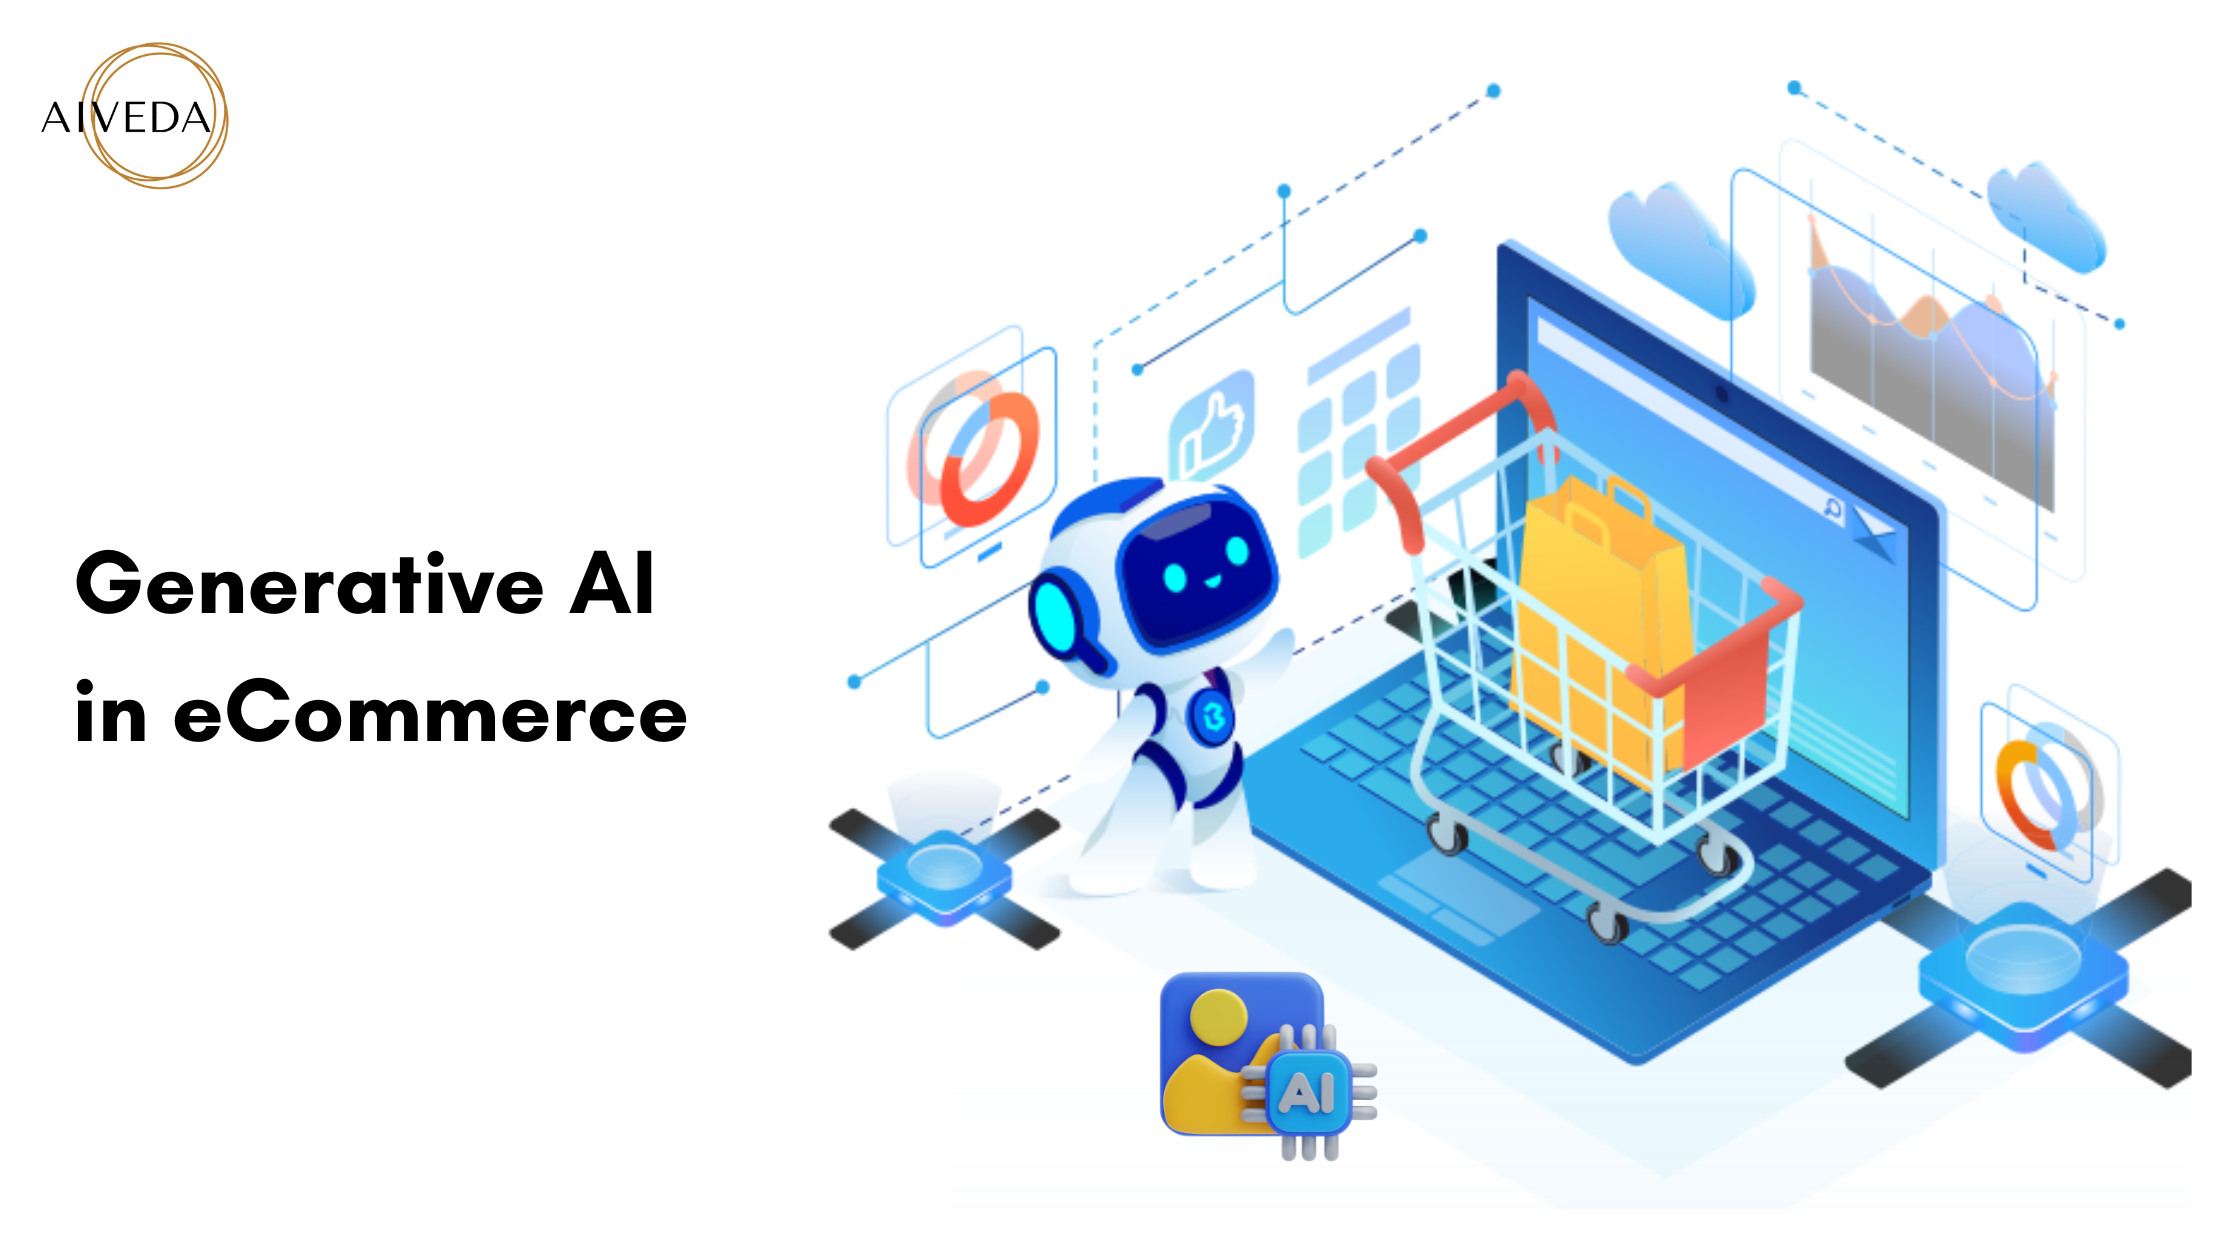 Revolutionizing eCommerce with Generative AI: Key Benefits and Strategic Applications